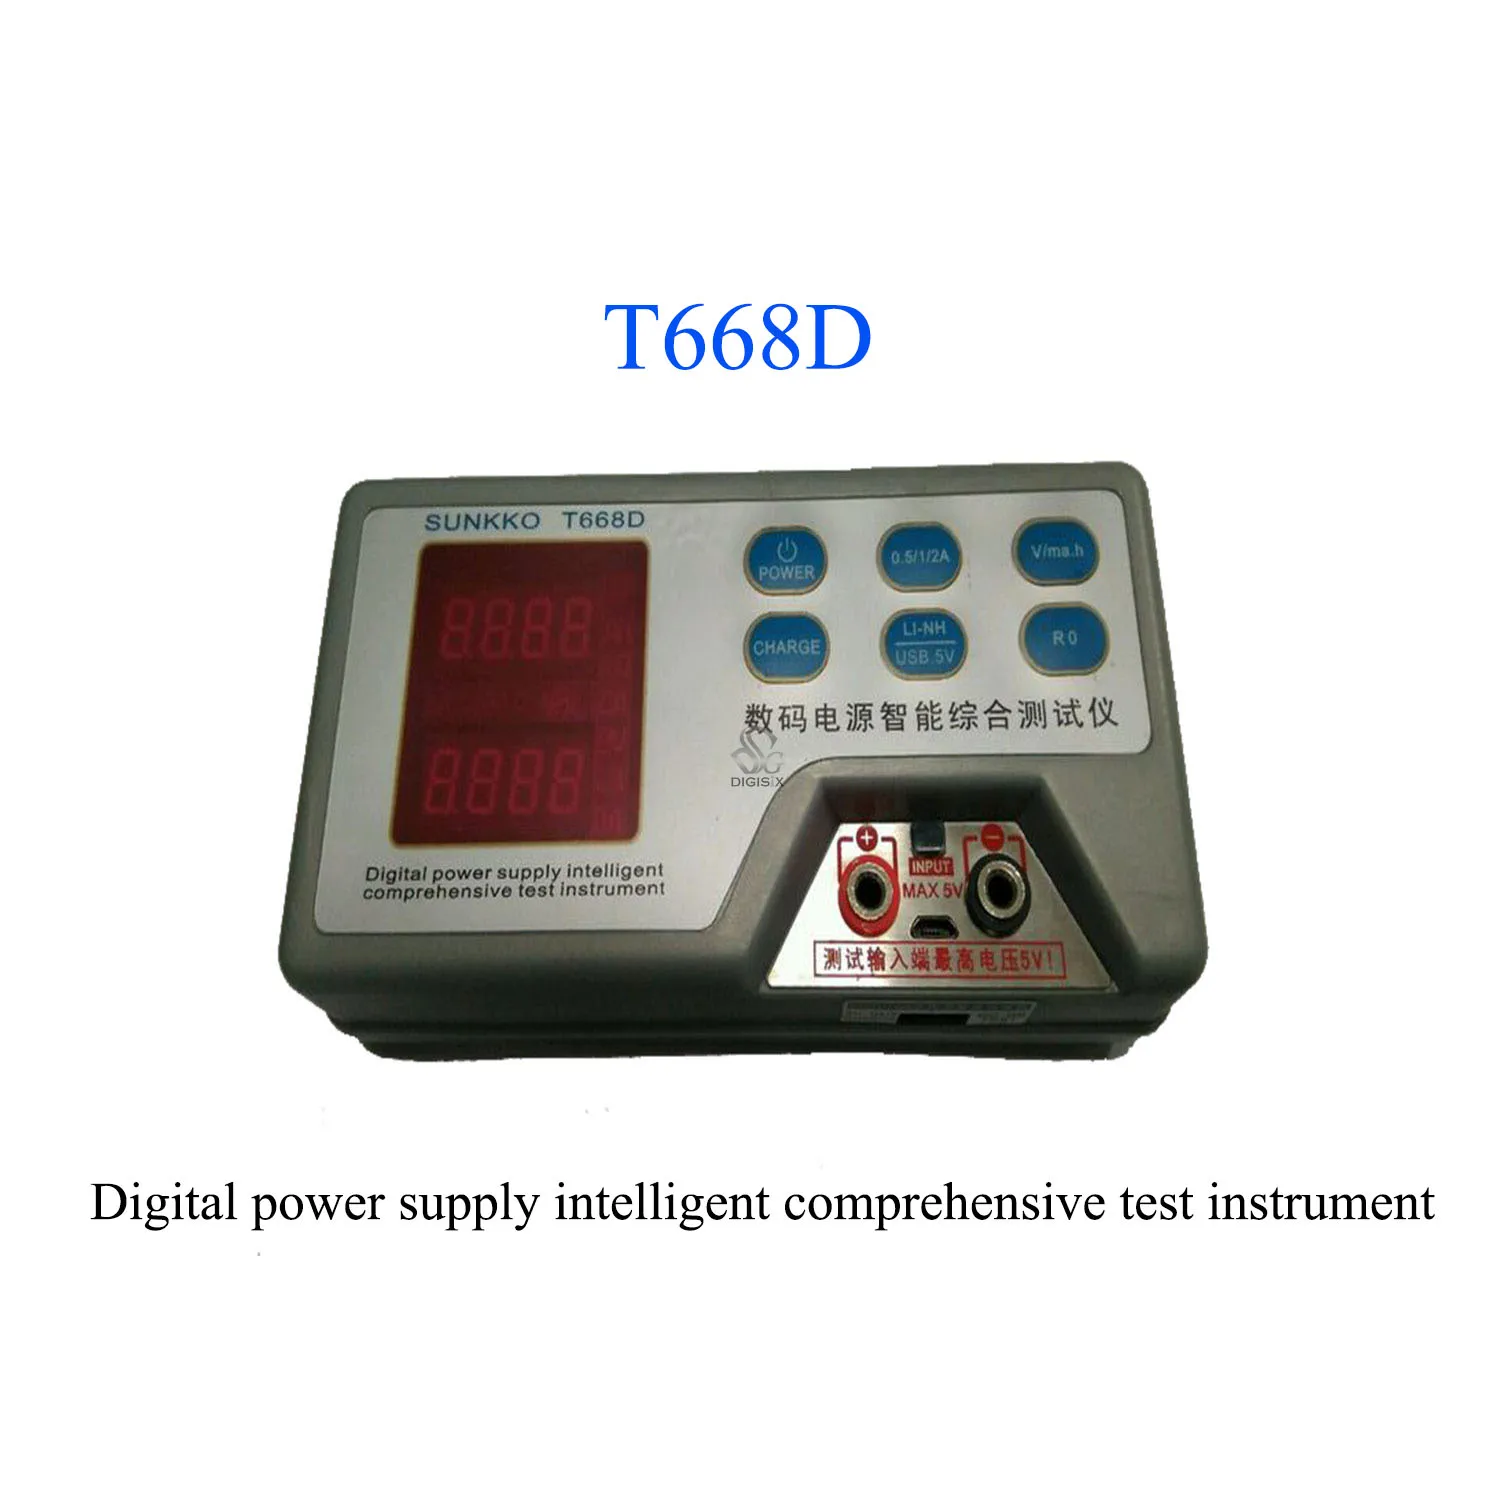 Sunkko T668D Double precision display Digital power supply intelligent comprehensive test instrument enlarge